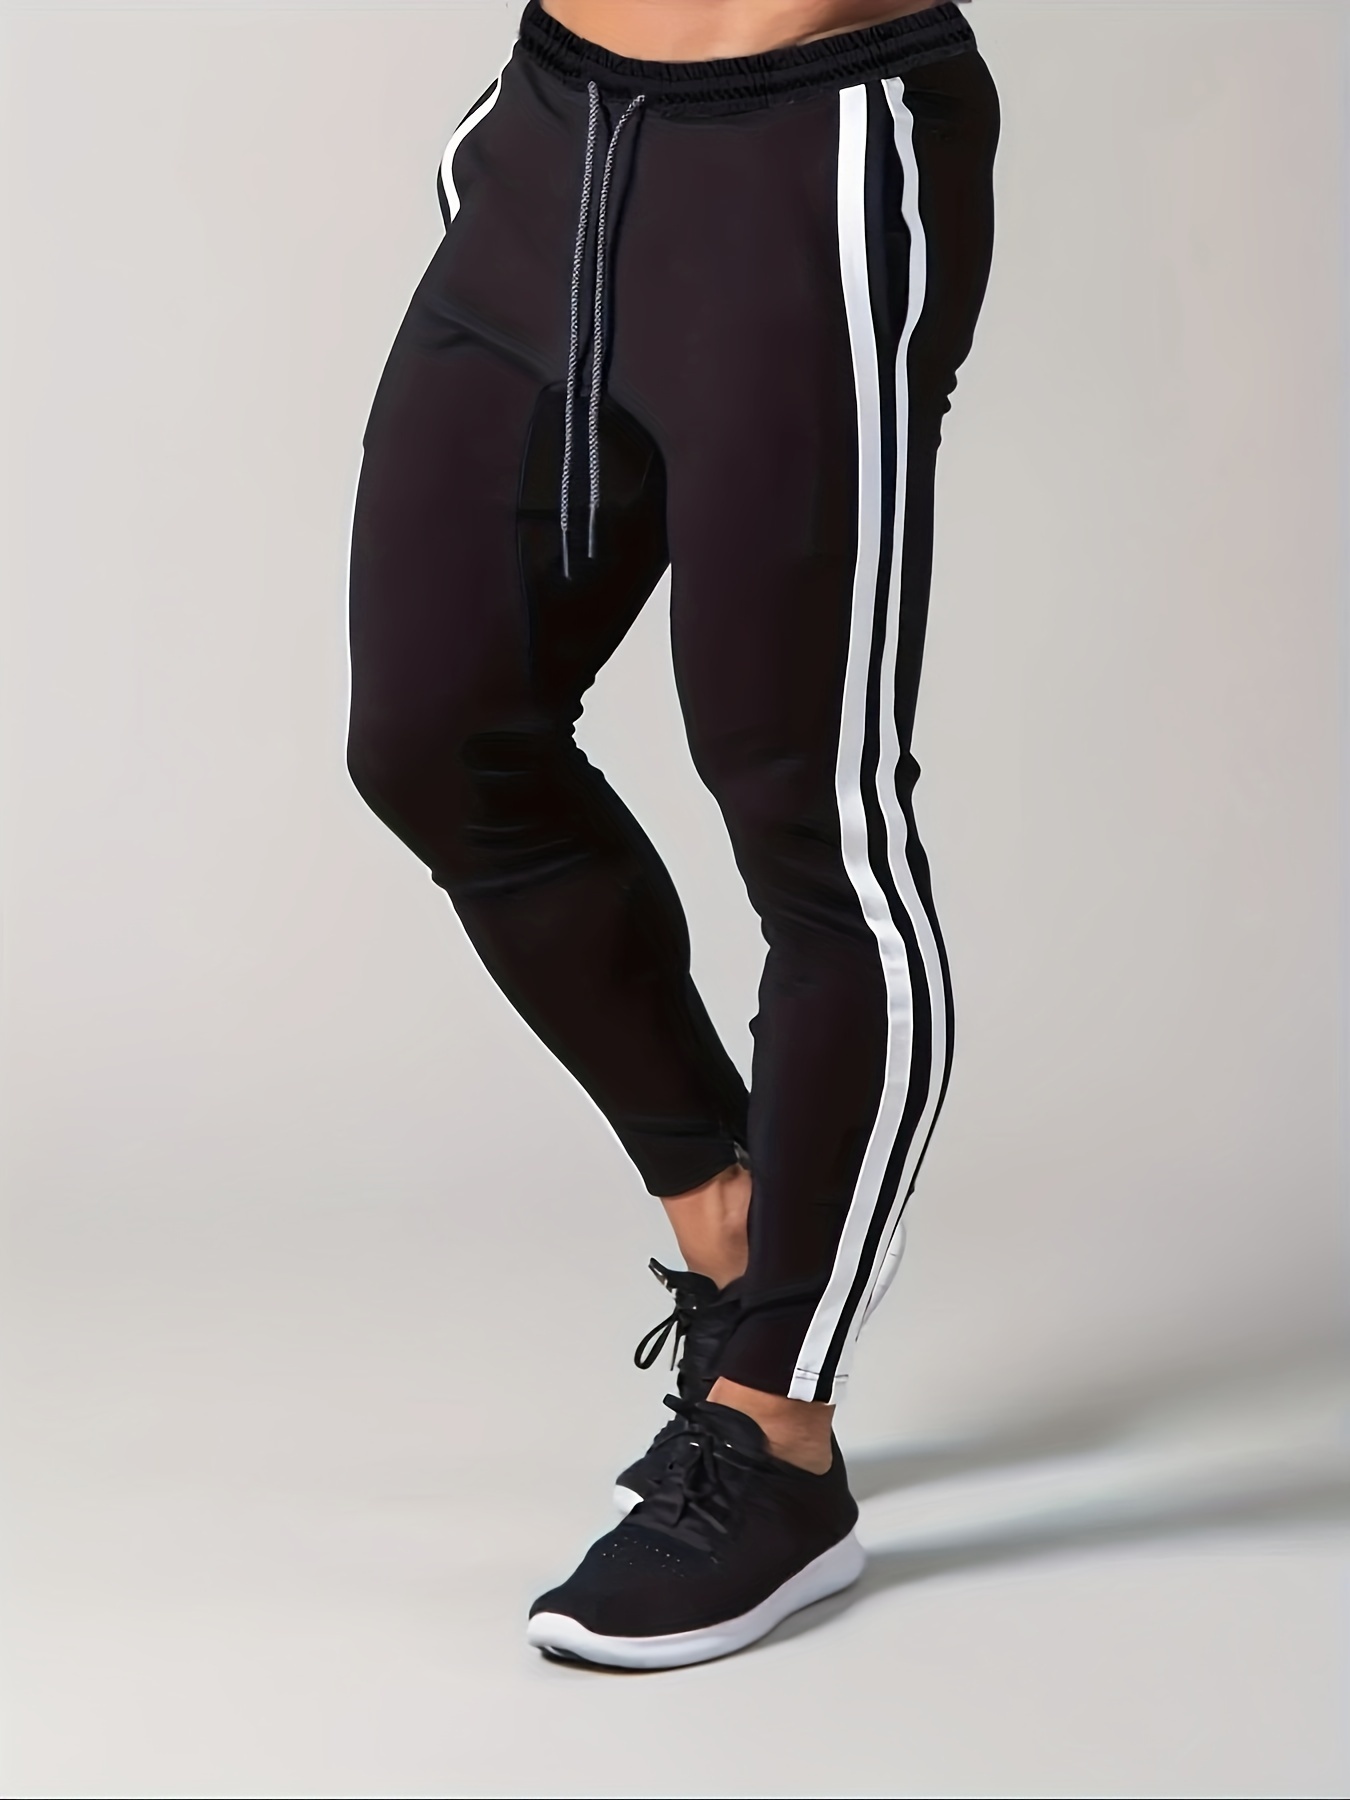 Women's Running Leggings Sweatpants Quick Dry Exercise Pants